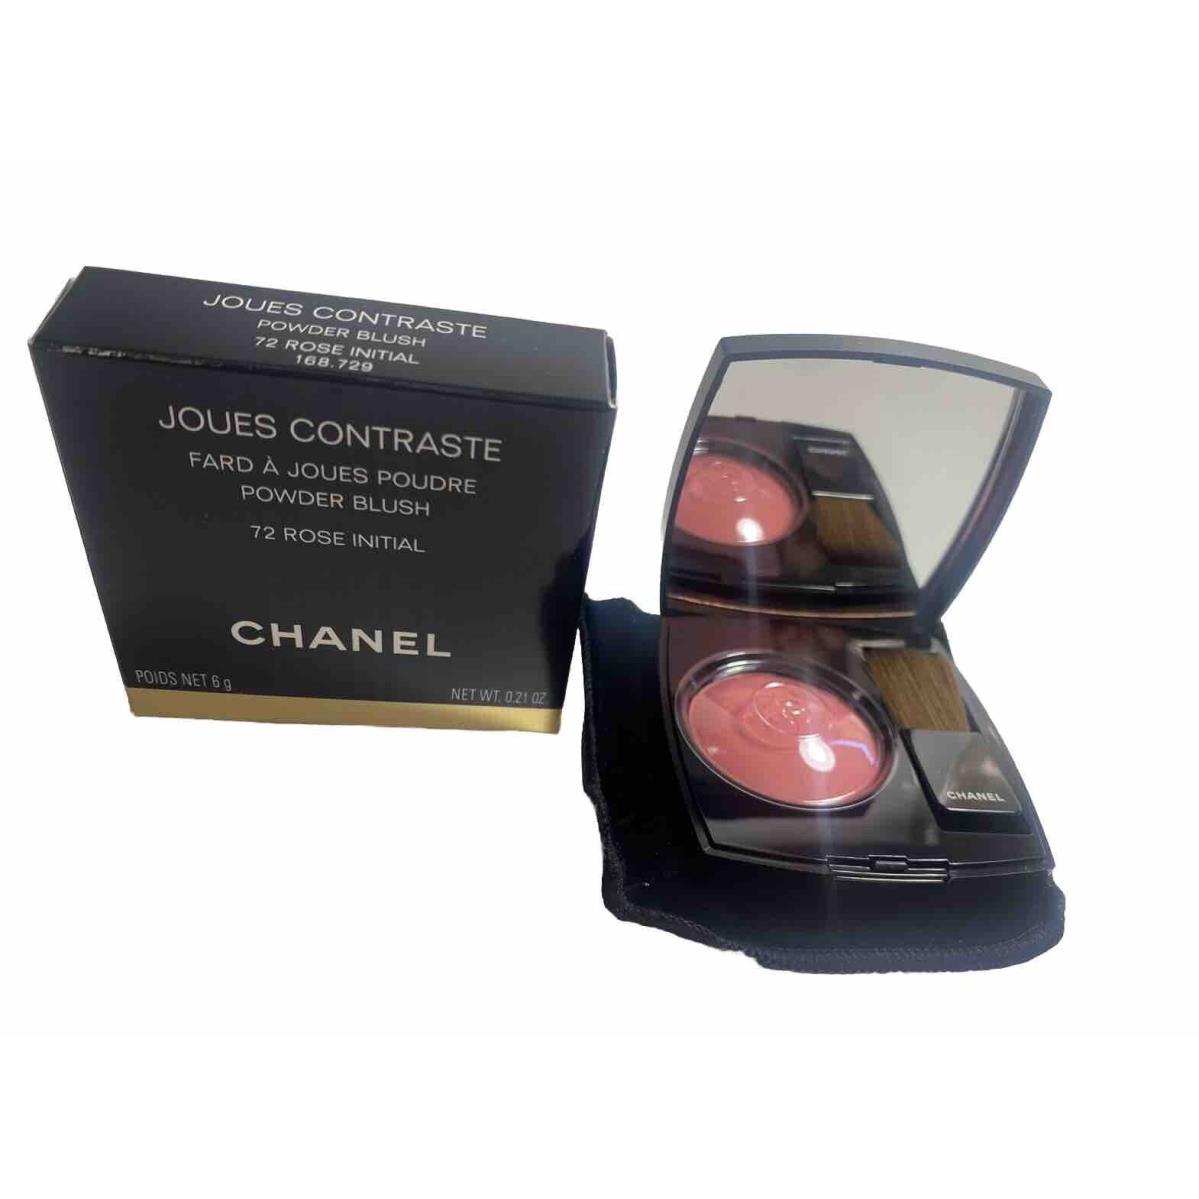 Chanel Joues Contraste Powder Blush 72 Rose Initial 0.21 Oz/ 6 g